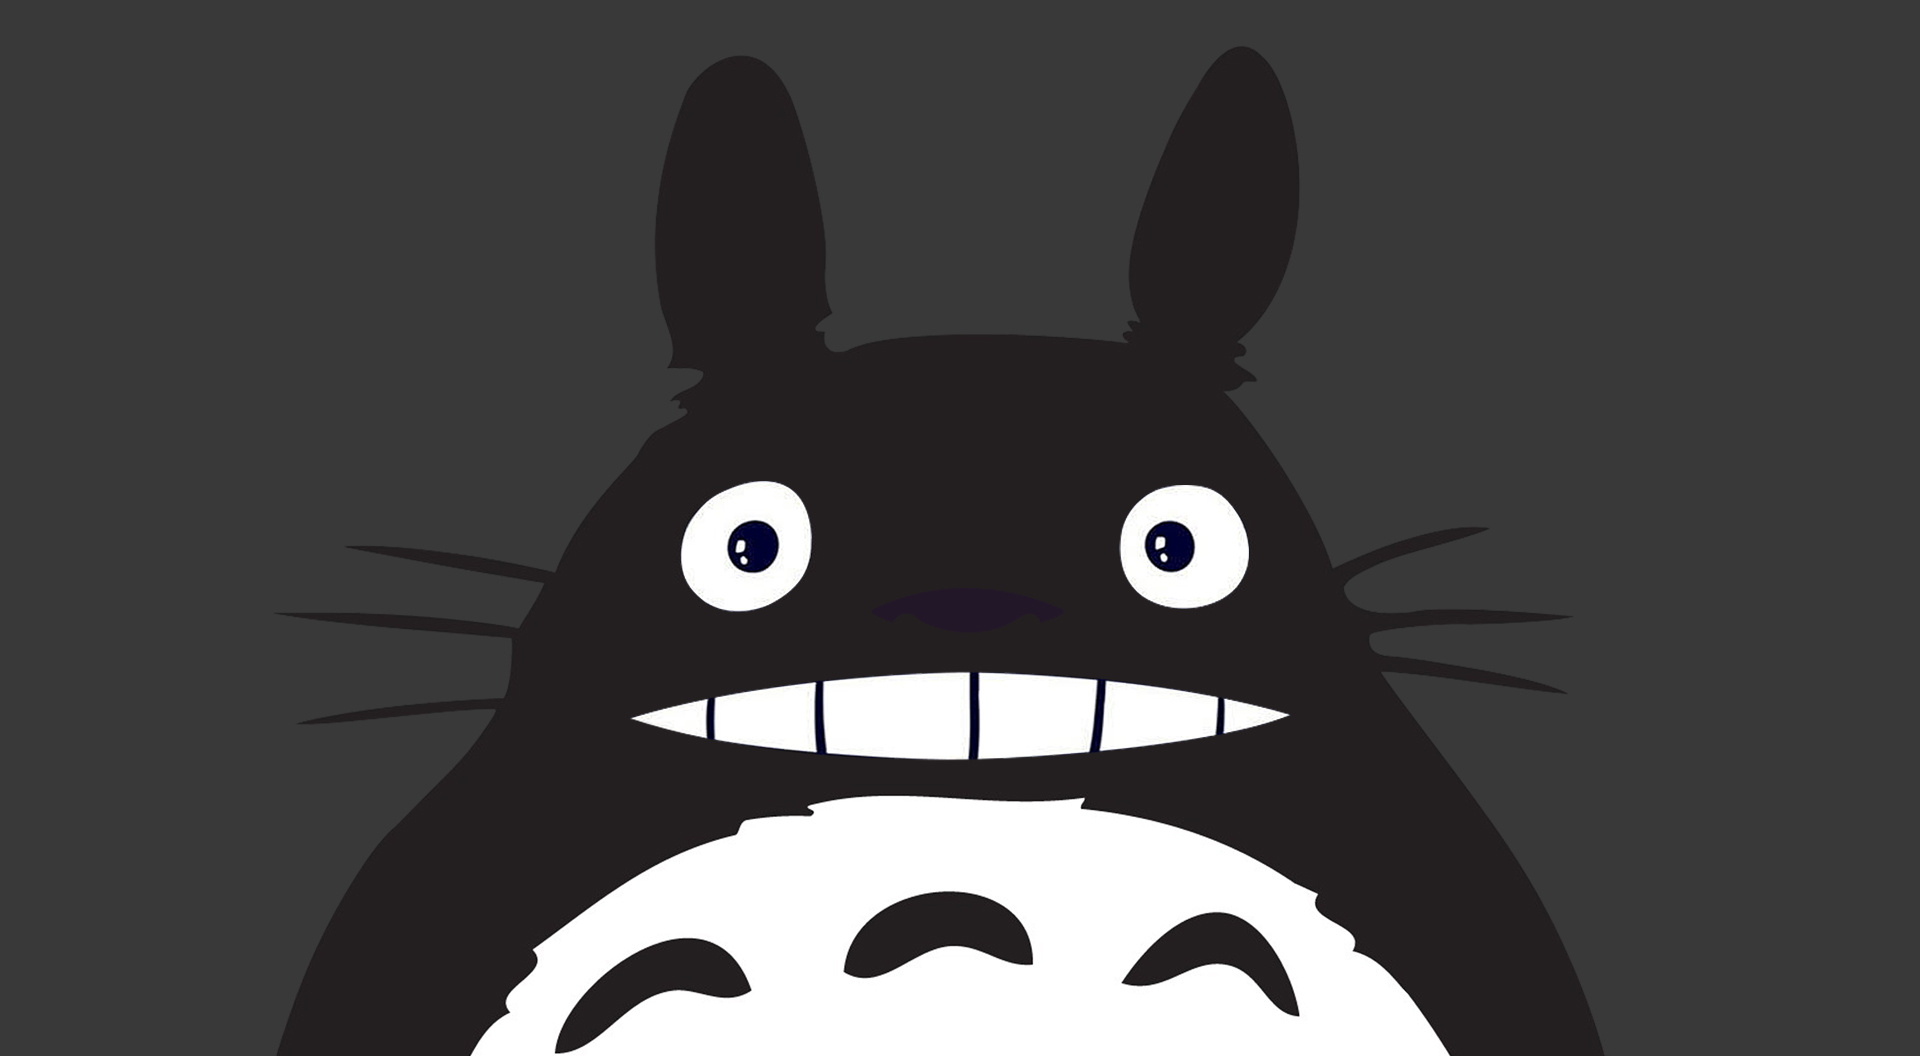 ArtStation - Ghibli dreams - Totoro